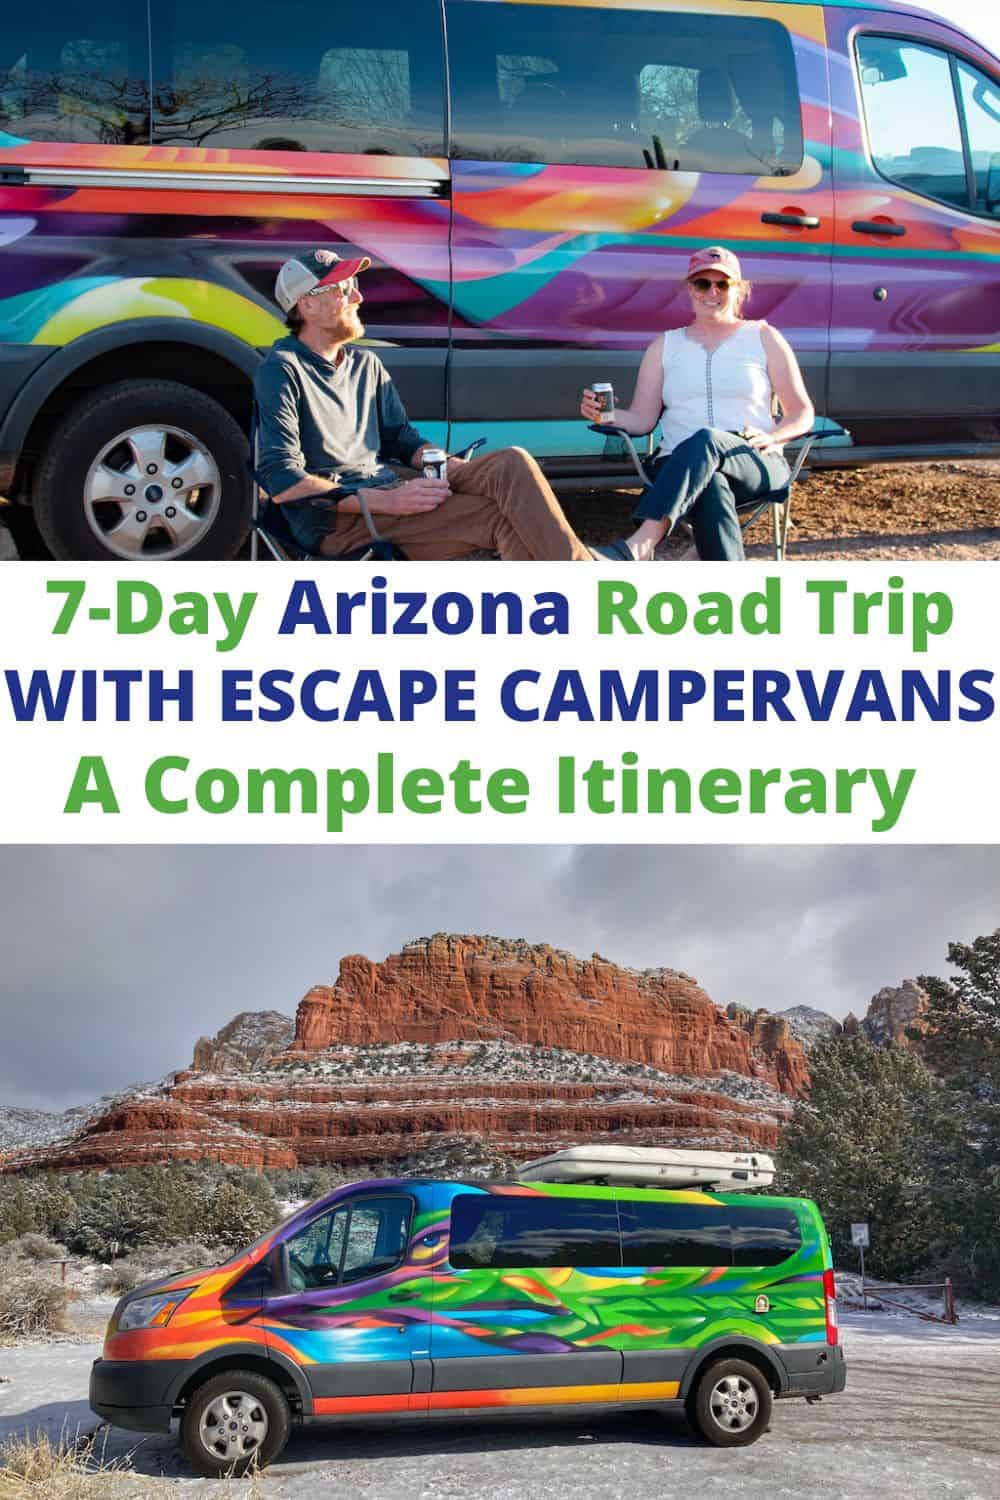 An Escape Campervan on an Arizona Road Trip.